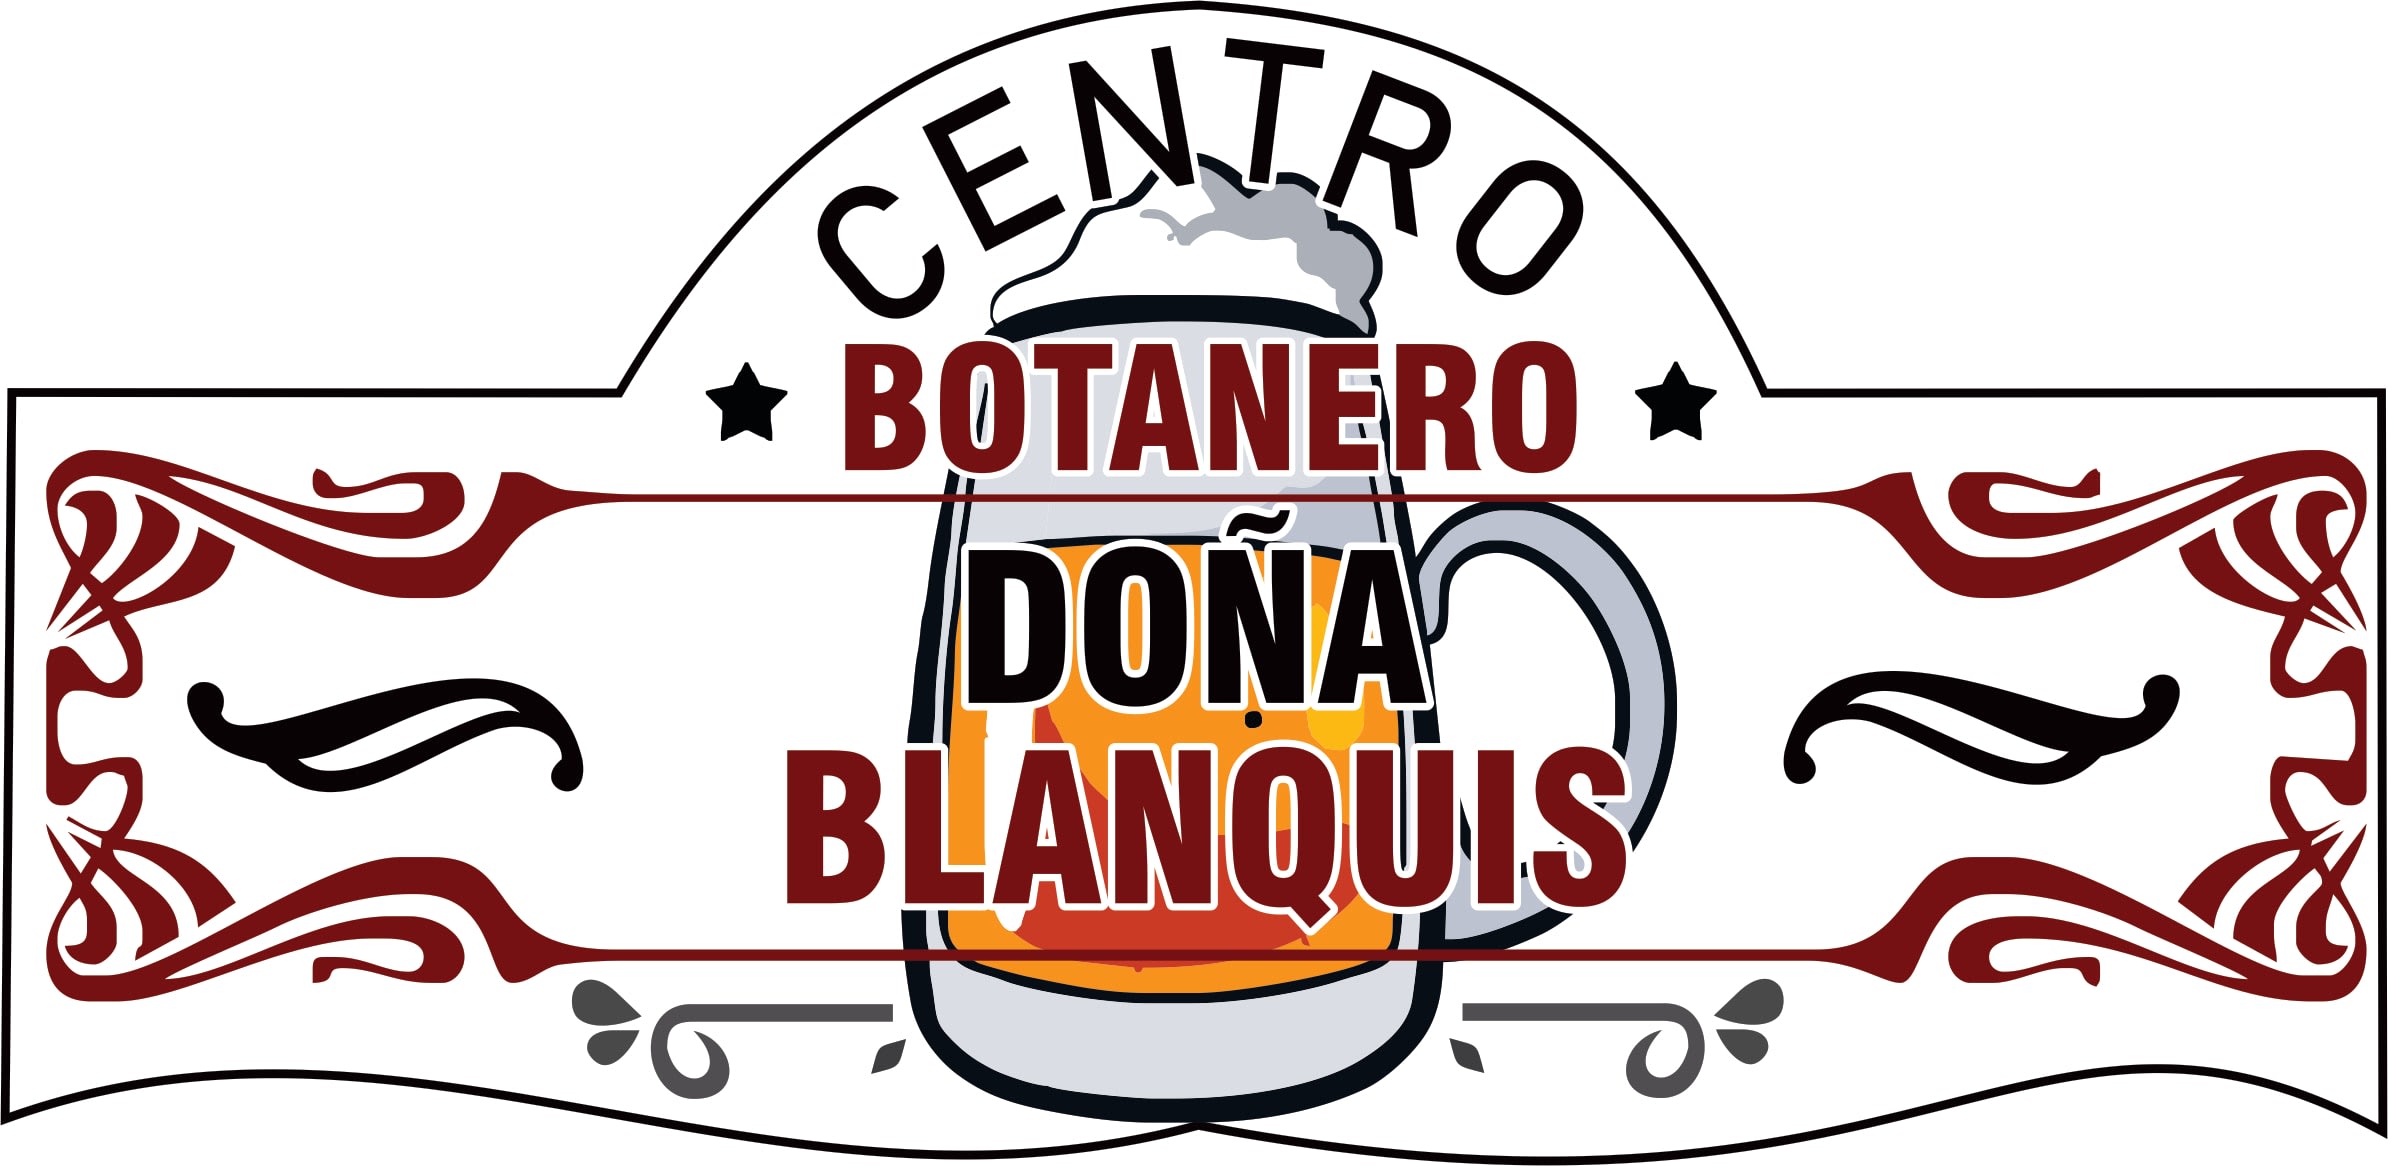 Botanero "Doña Blanquis"